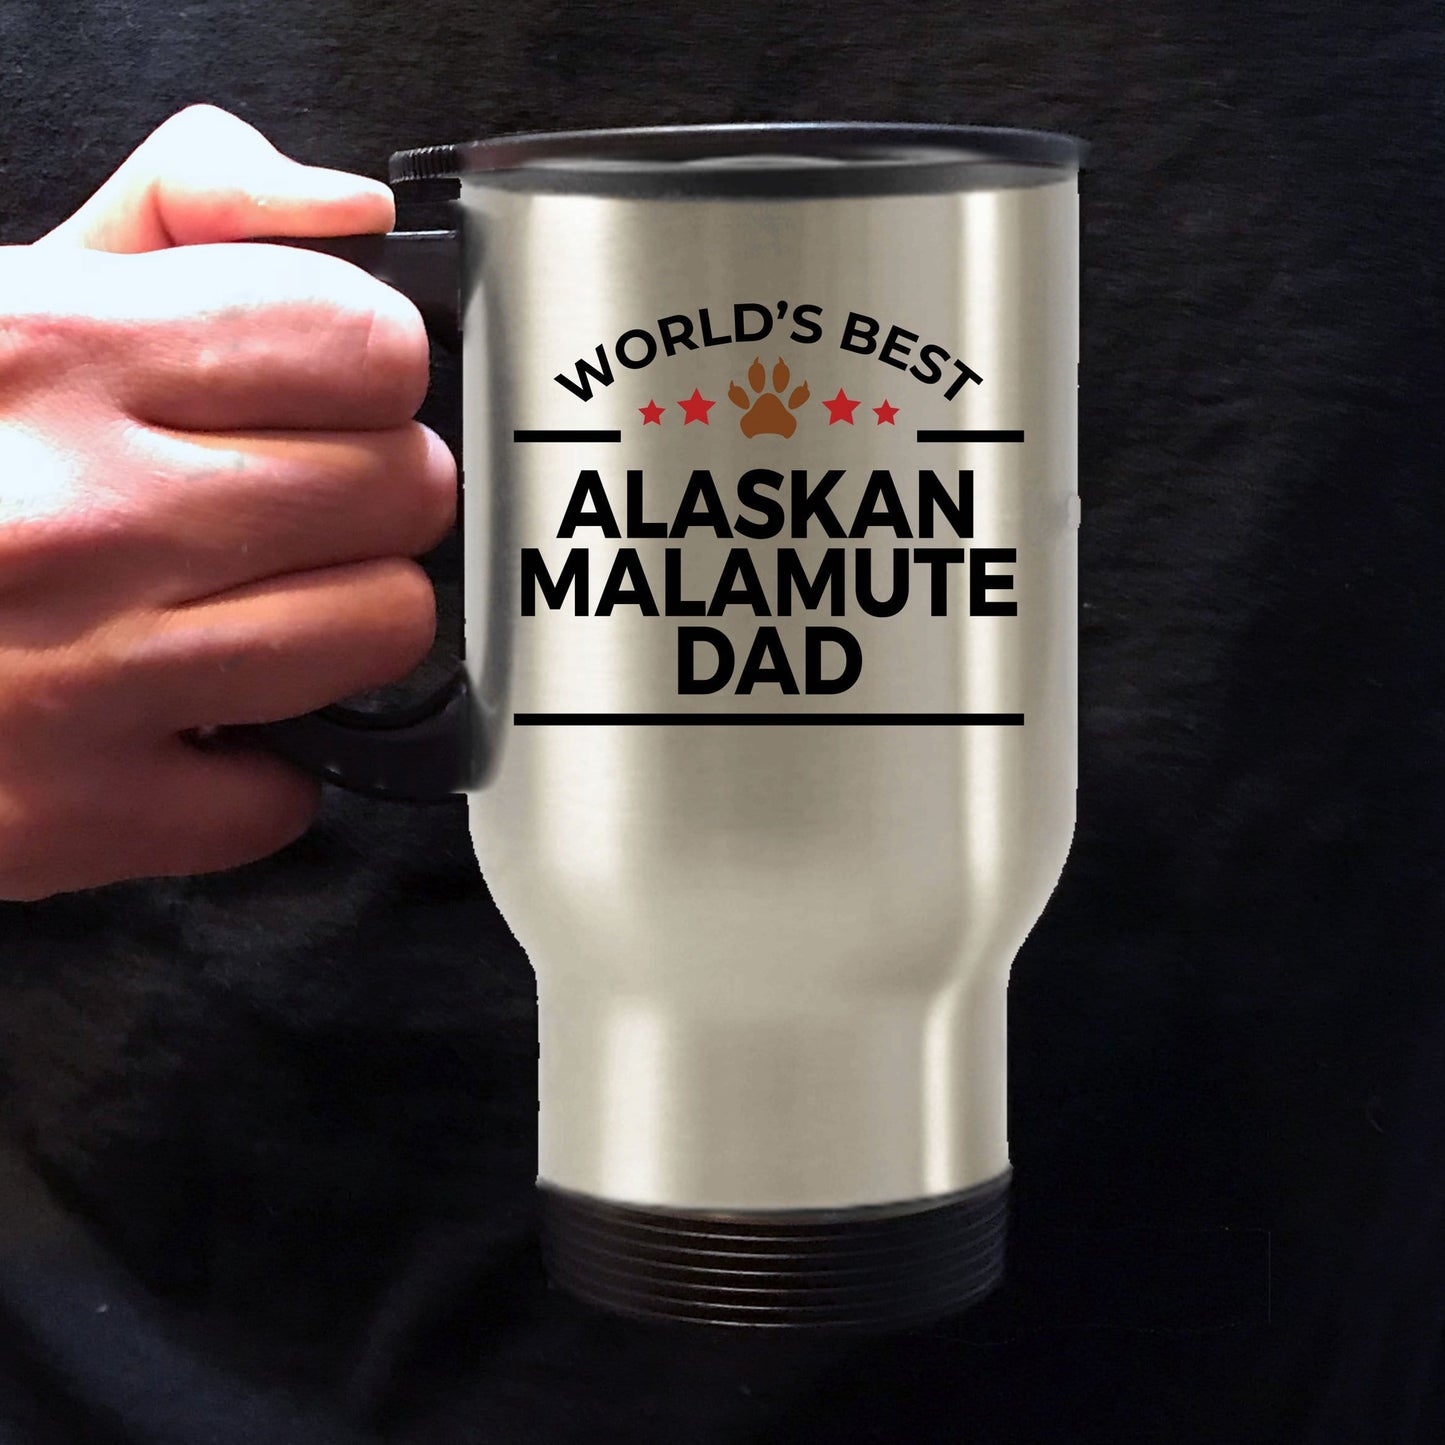 Alaskan Malamute Dog Dad Travel Coffee Mug